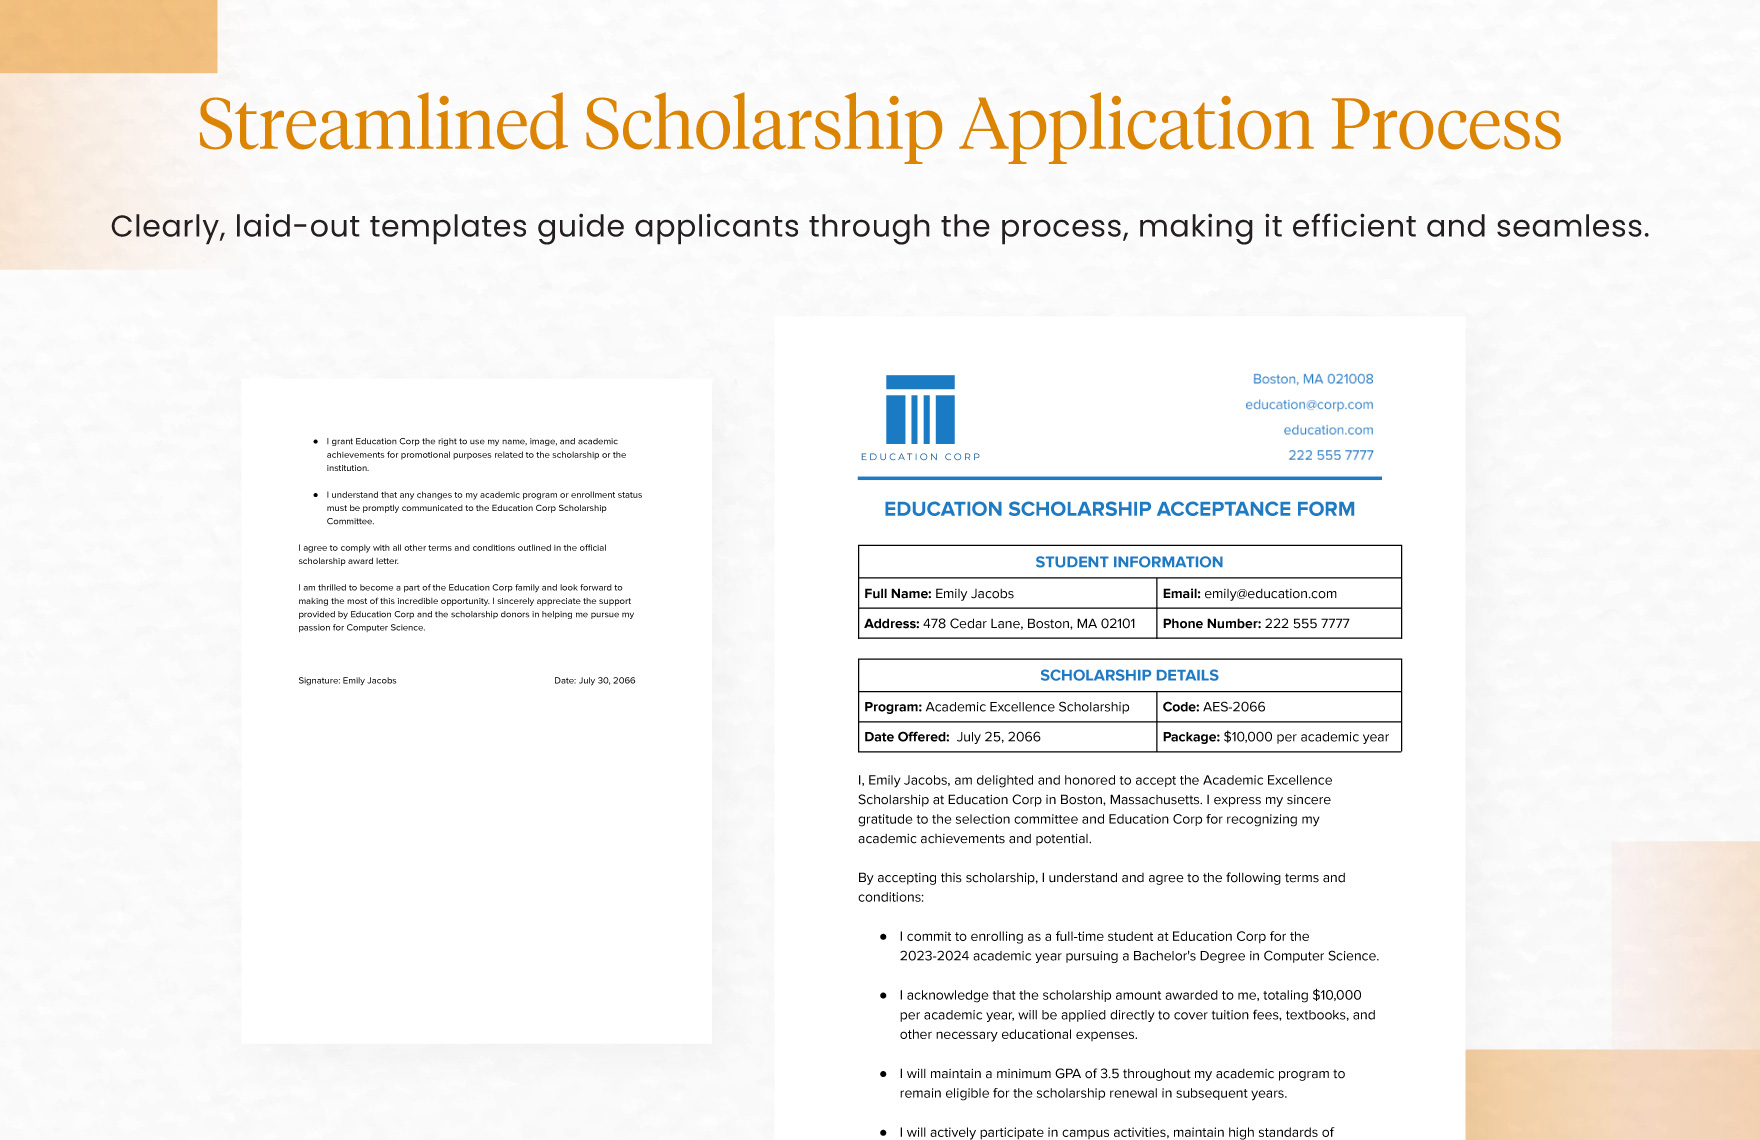 Education Scholarship Acceptance Form Template